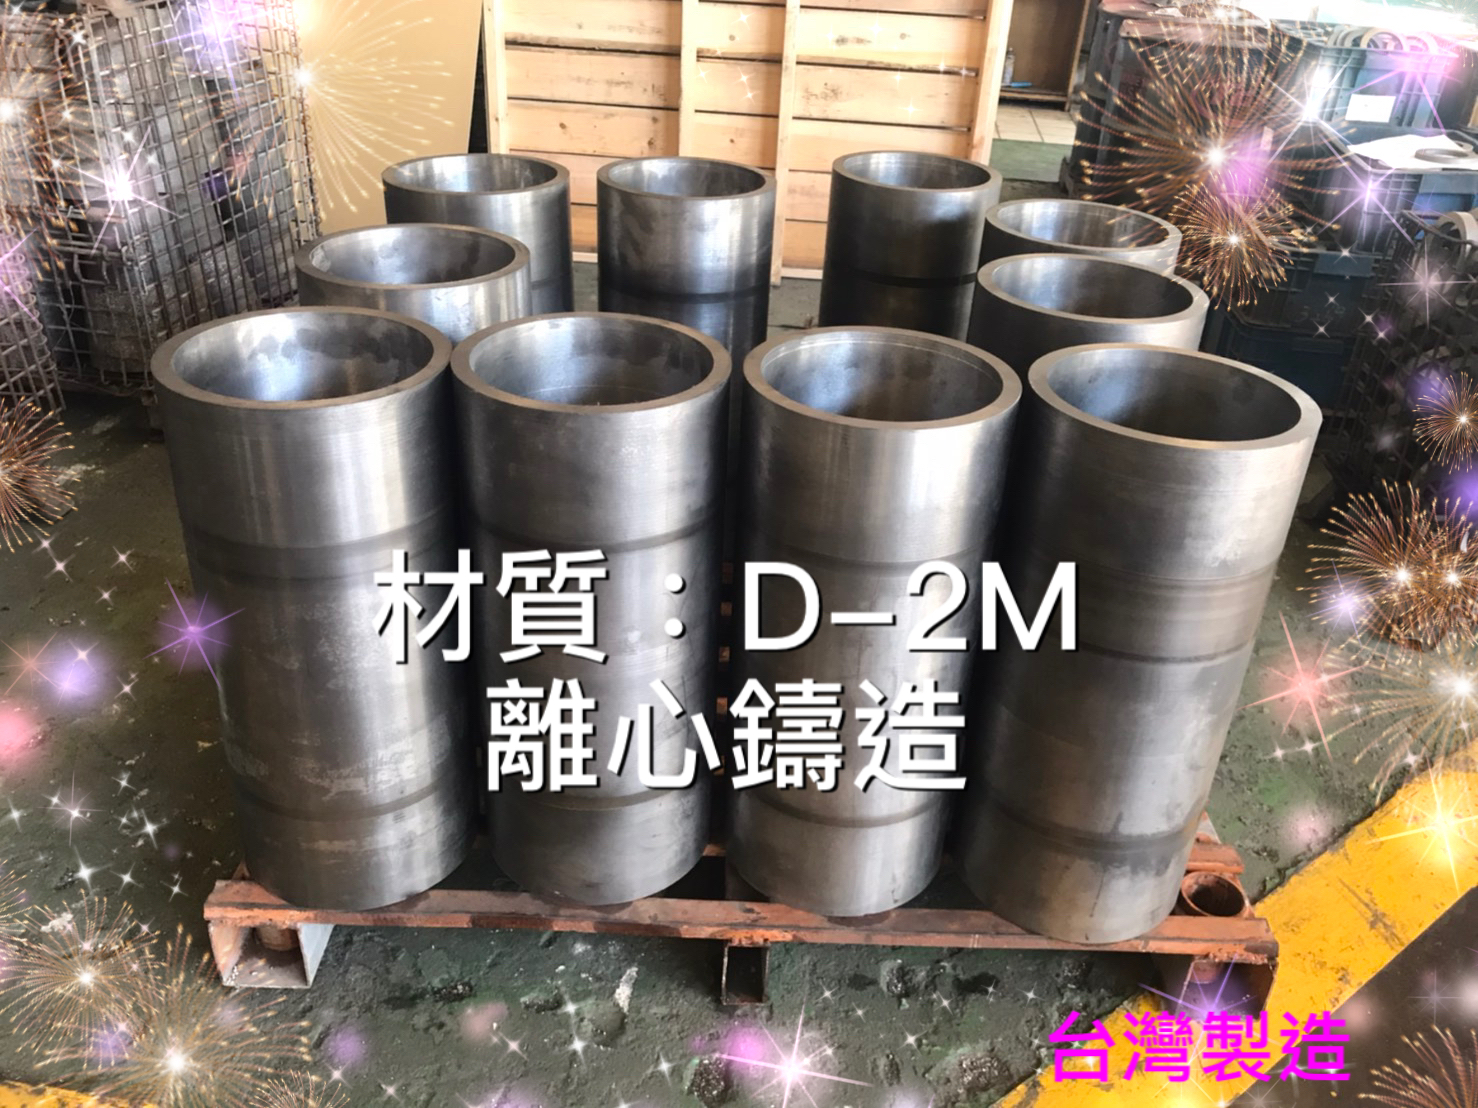 D-2M管由離心鑄造技術製成